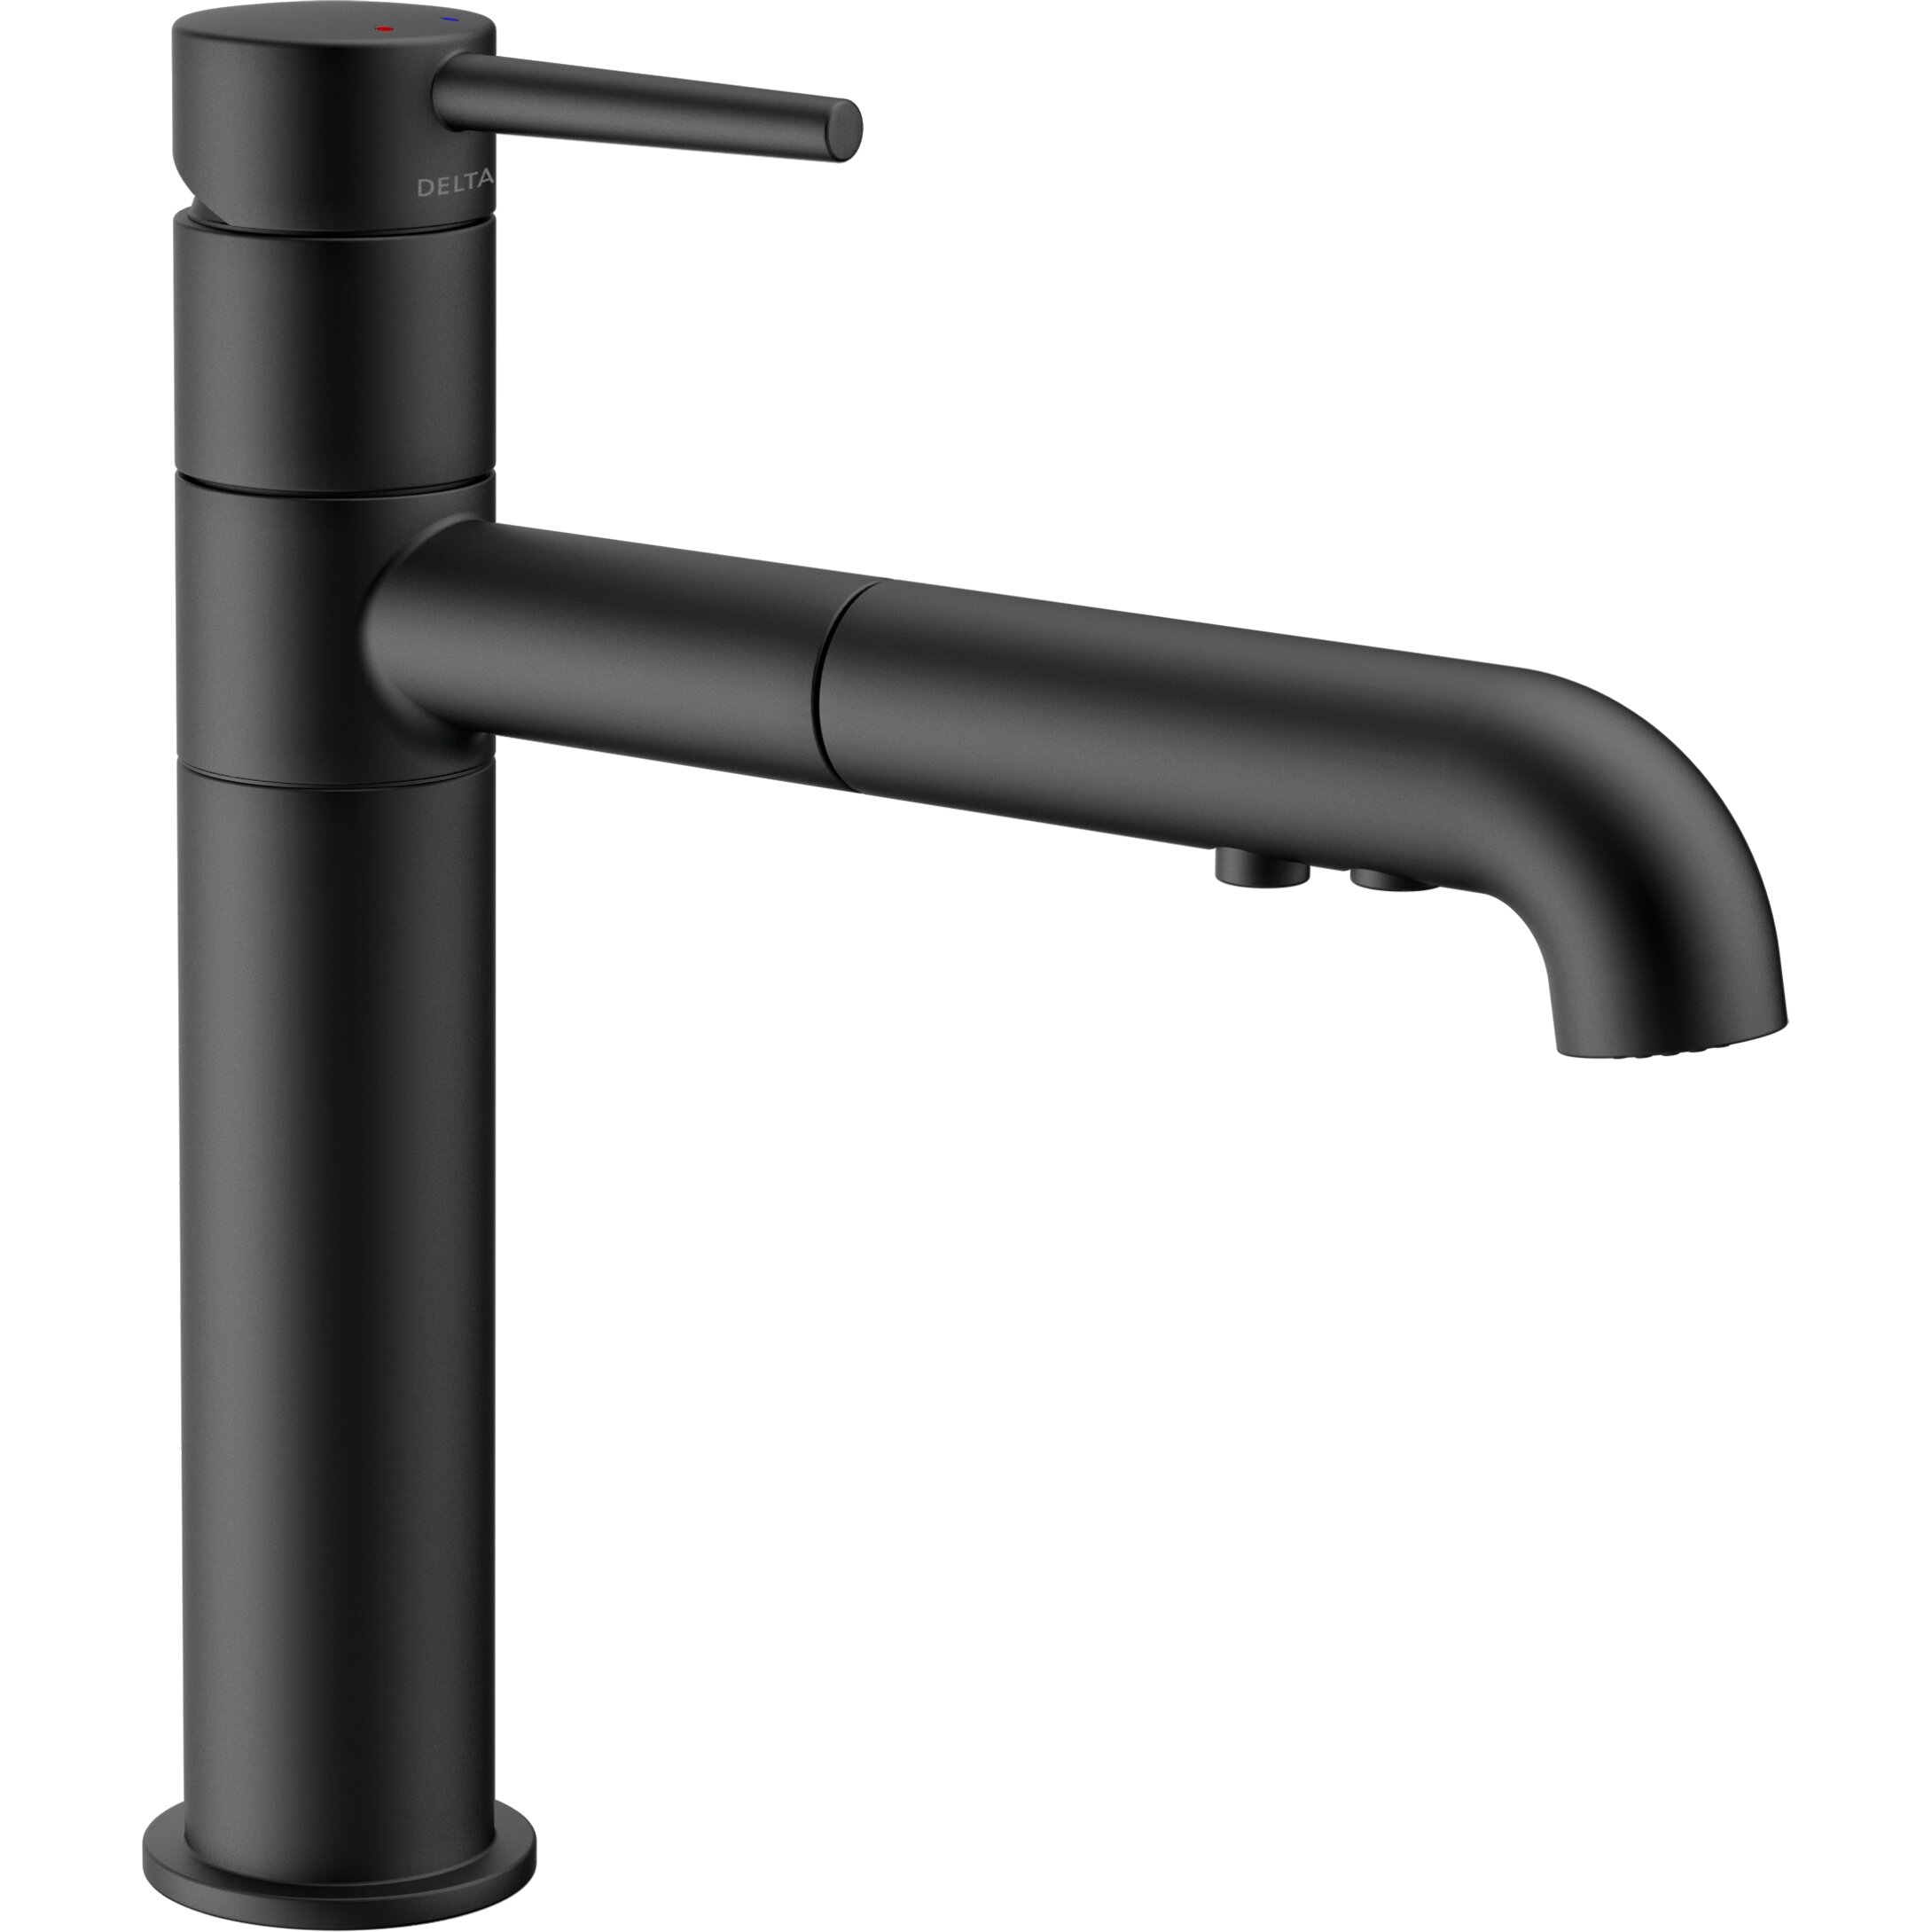 Saxony single handle pullout kitchen faucet